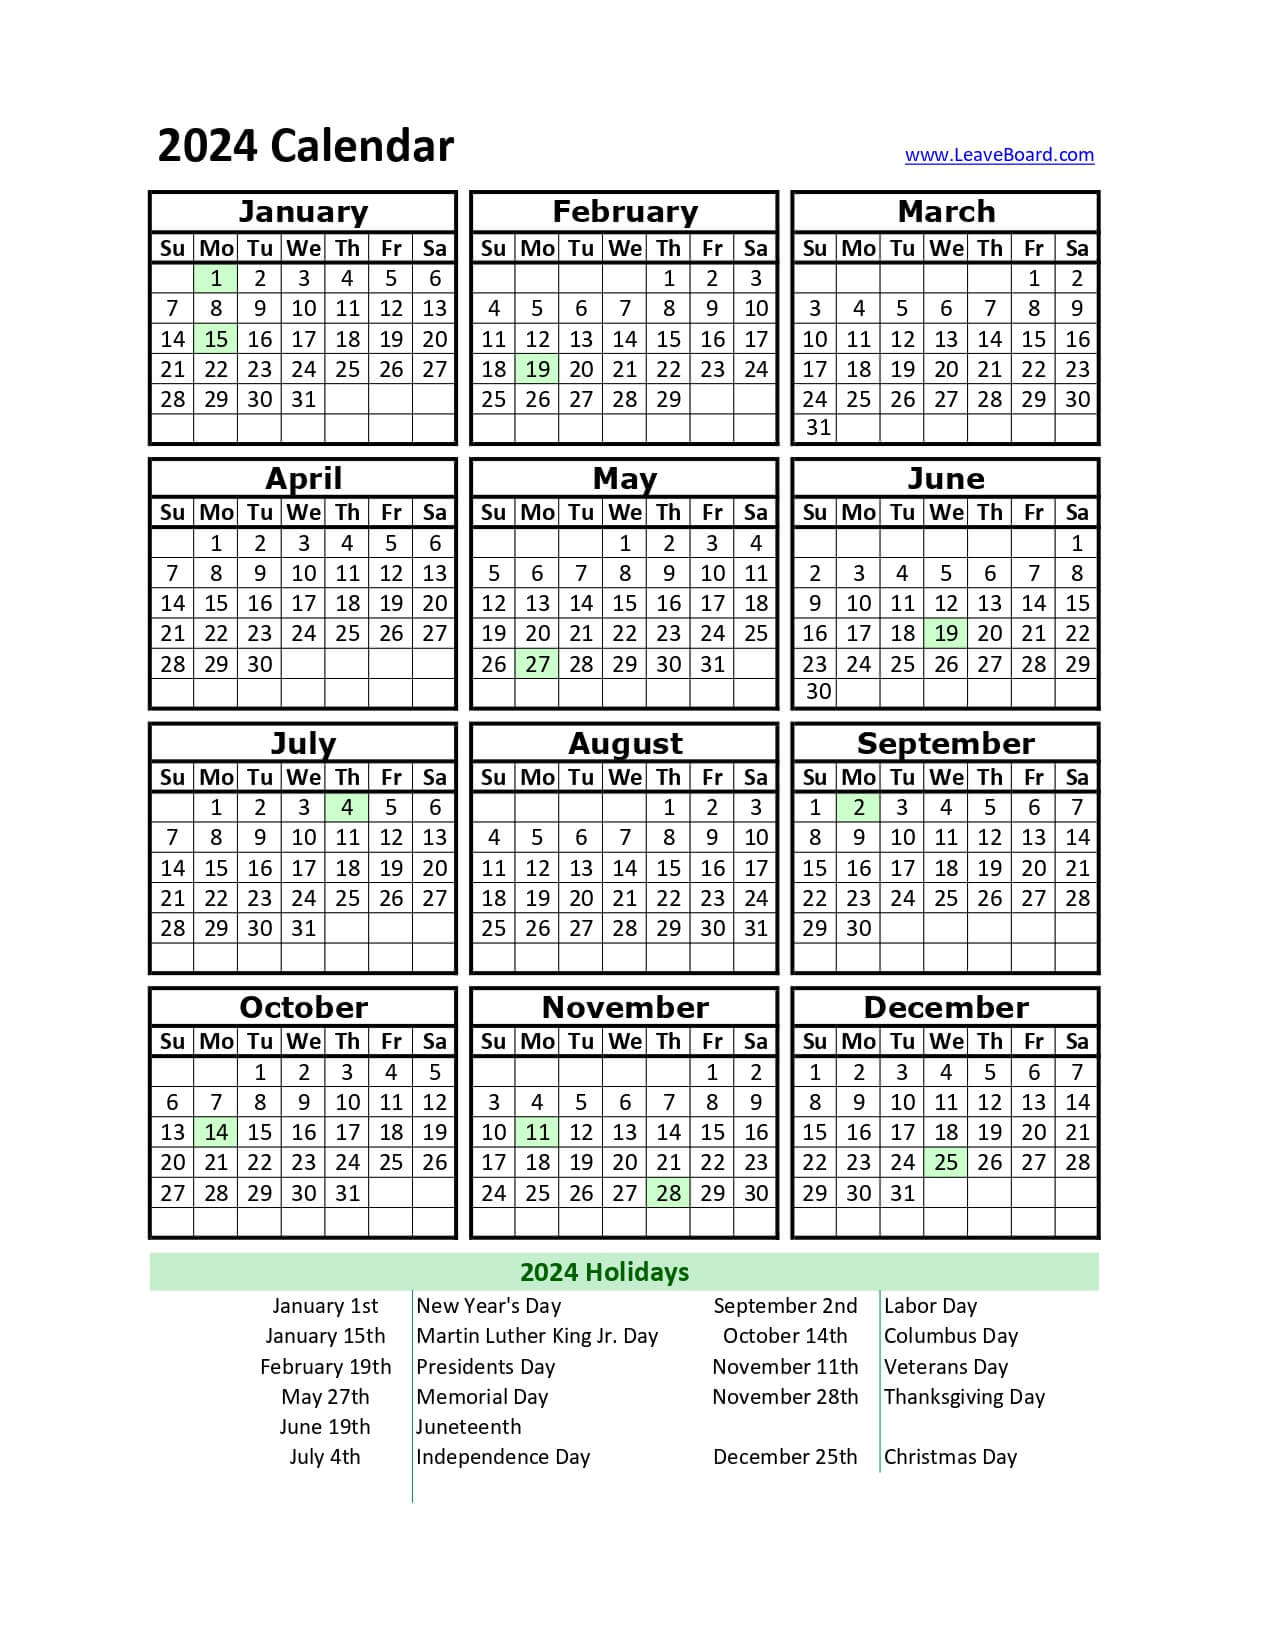 2024 Palendar Printable: PDF, Excel, With Holidays (Free Download) -  LeaveBoard